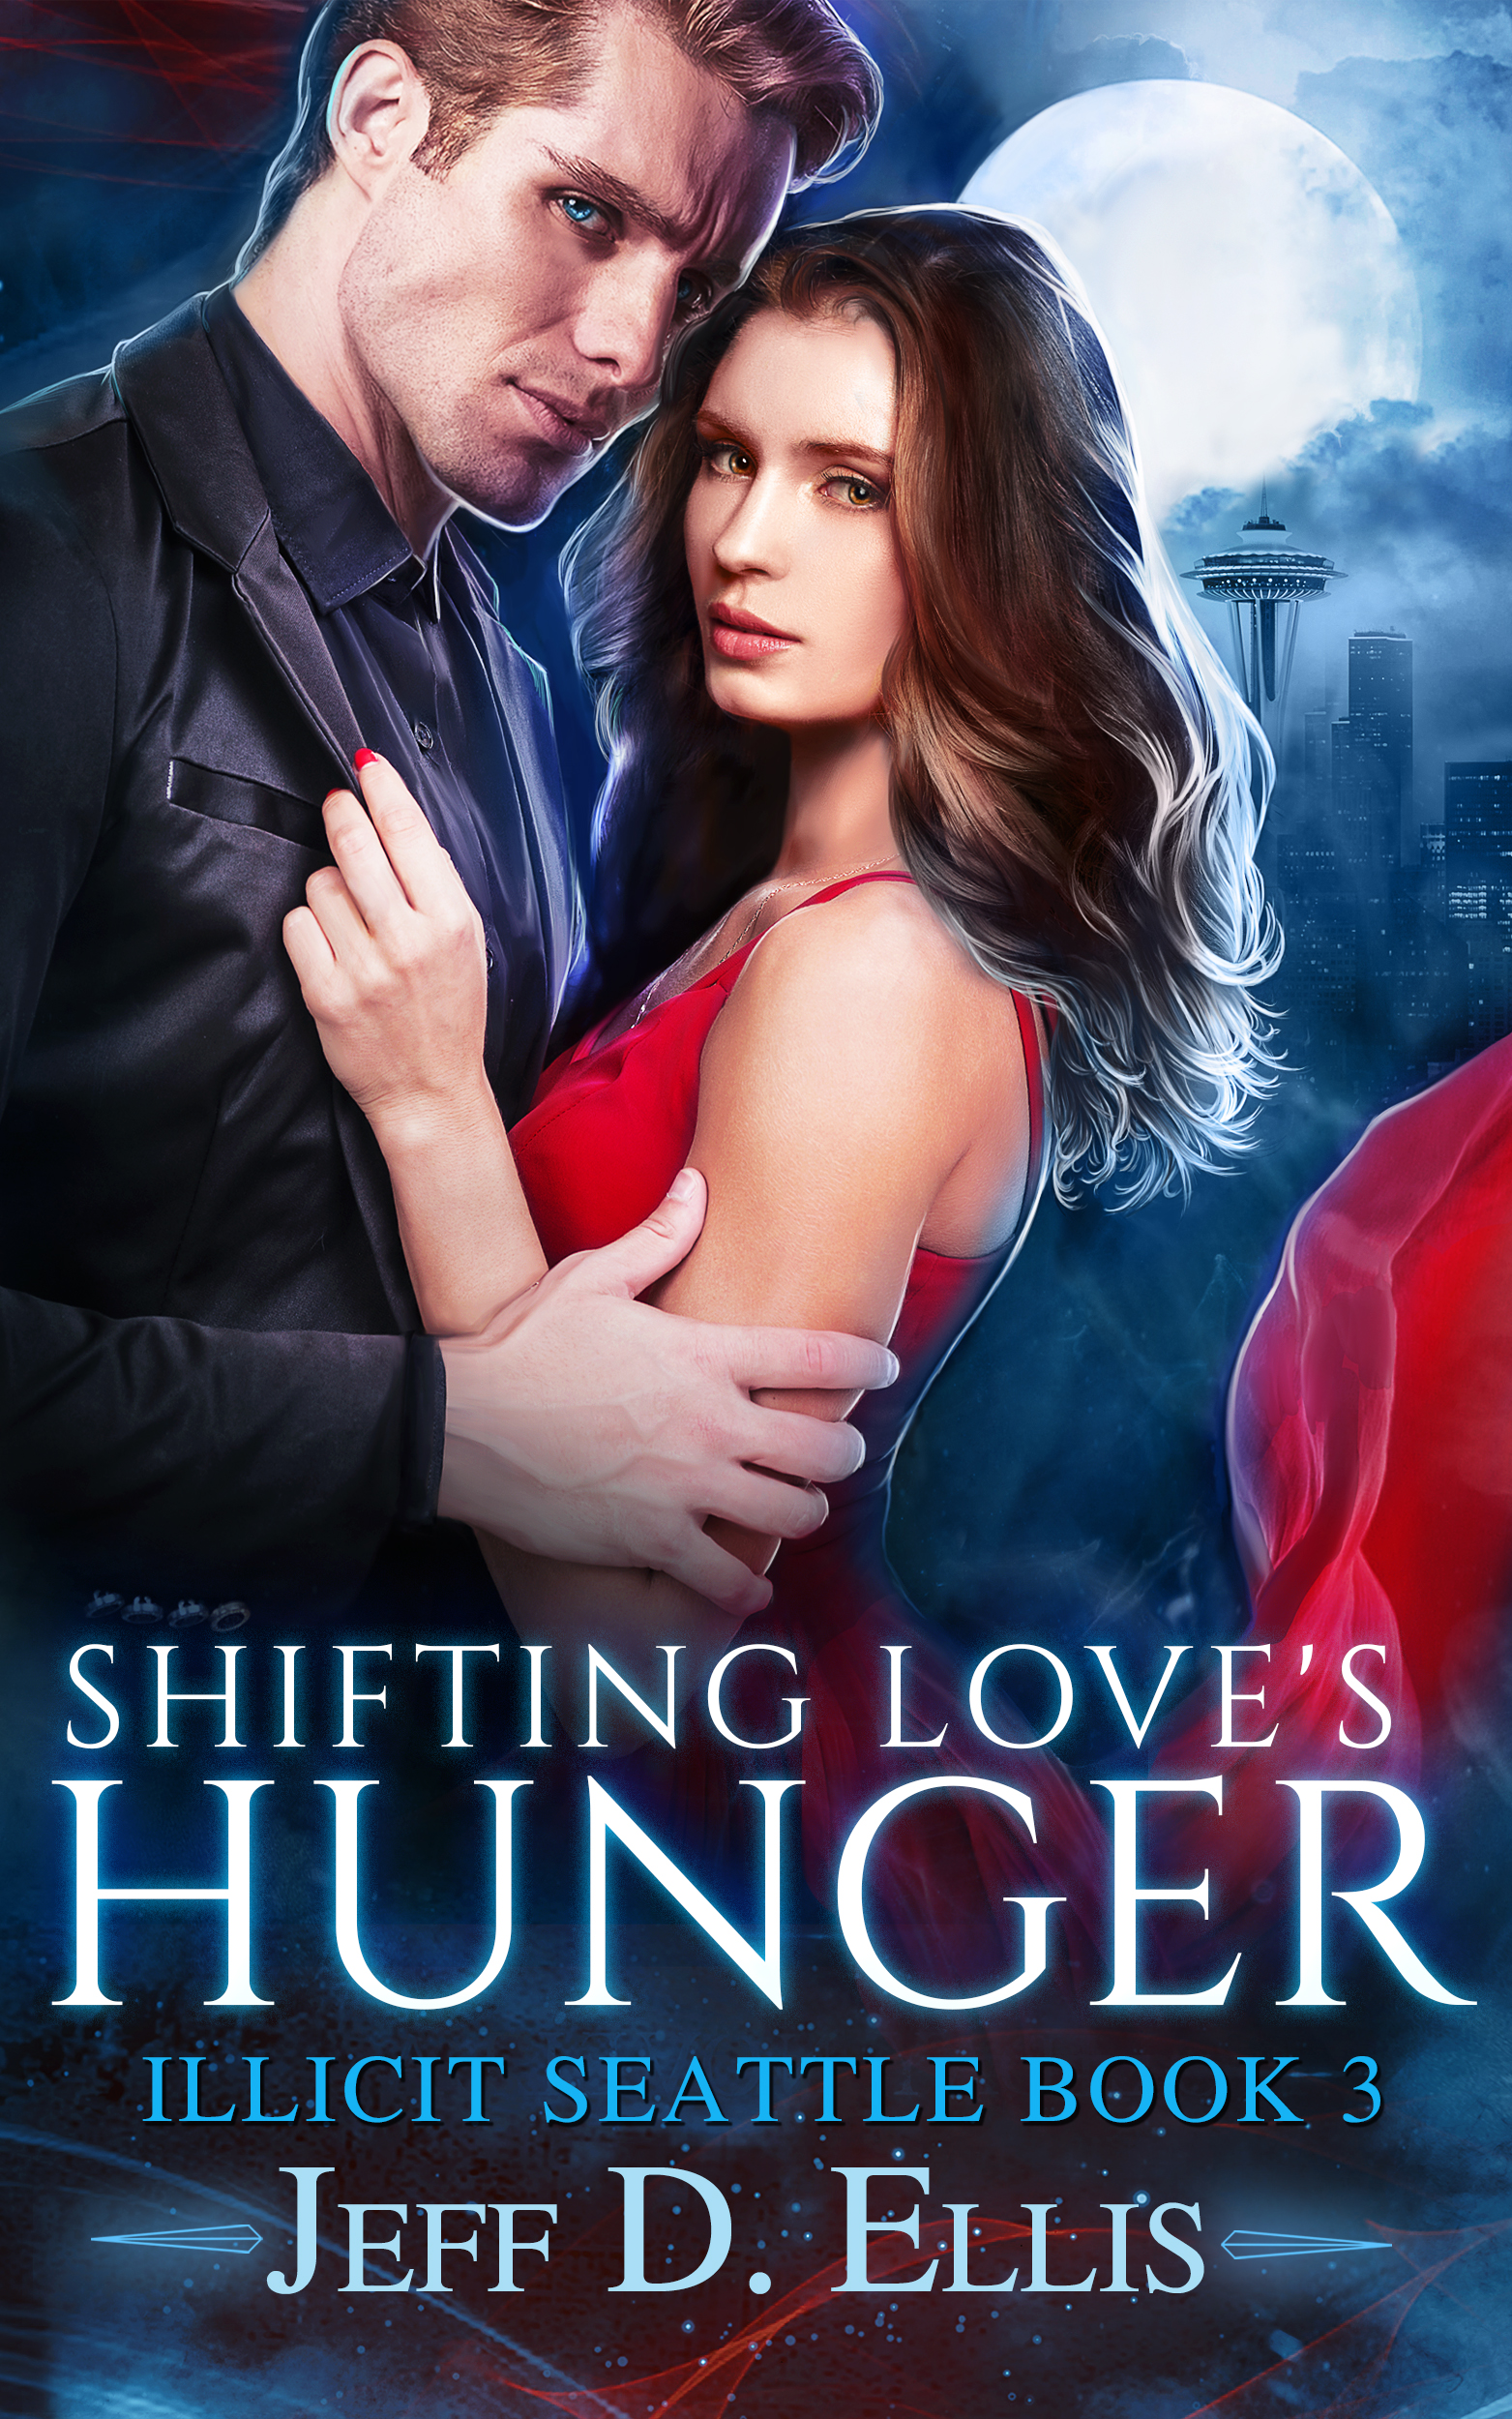 Shifting Love's Hunger